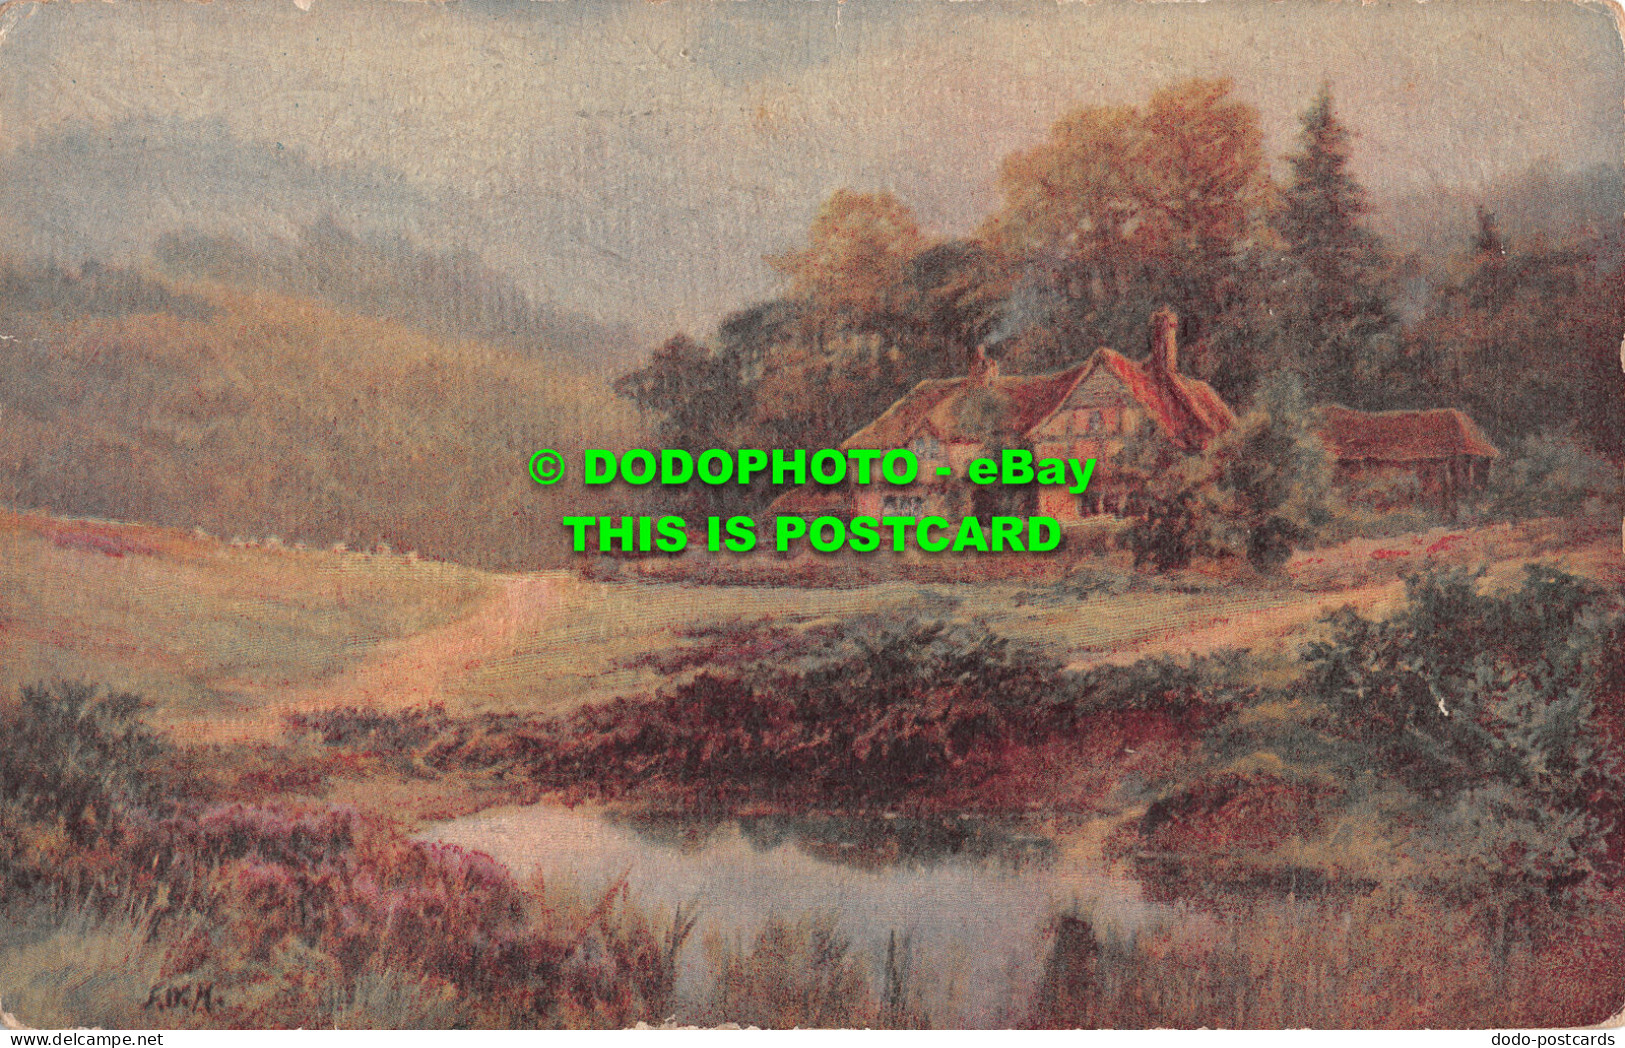 R501866 Unknown Old House. Pond. Oilart Series. No. 2933. 1921 - Monde